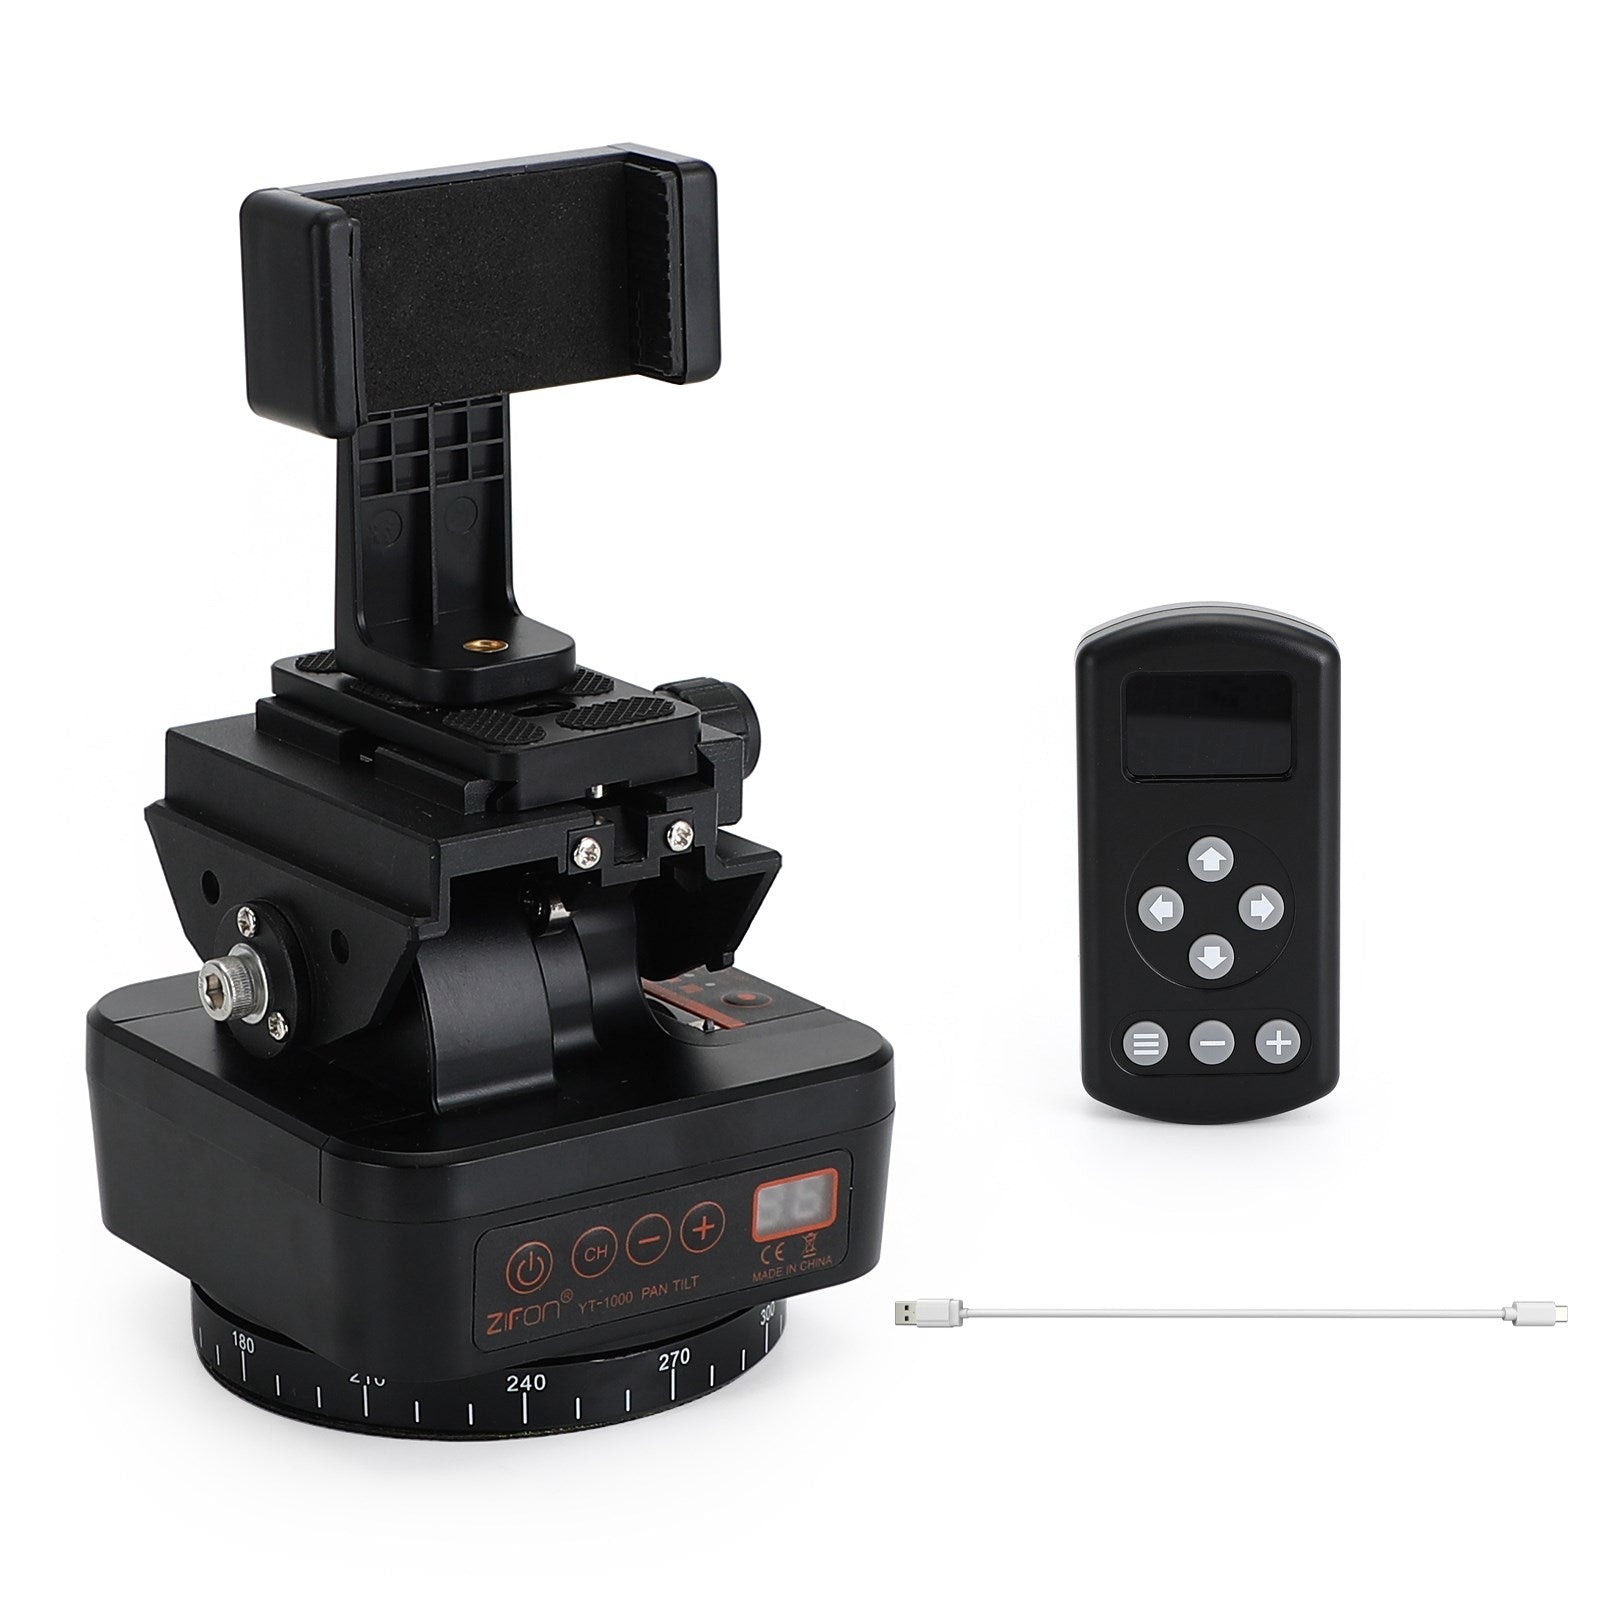 ZIFON YT-1000 Remote 360¡ã Testa per treppiede rotante panoramica per telefono Gopro DSLR